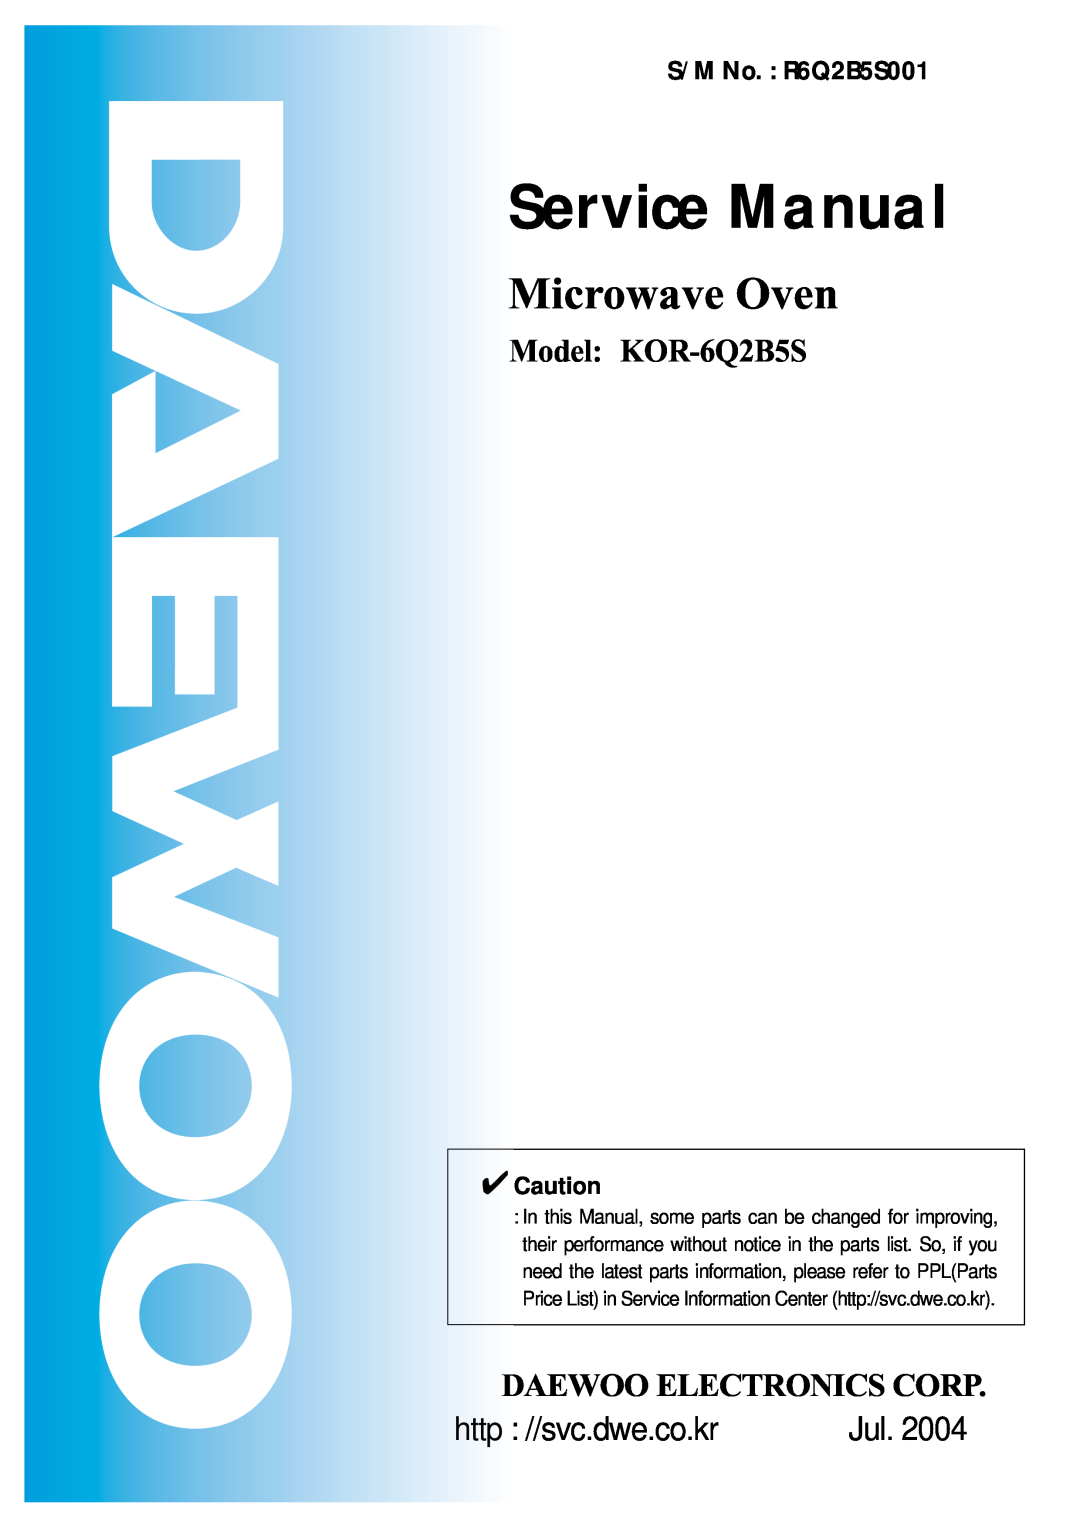 Daewoo service manual Microwave Oven, Model KOR-6Q2B5S, Daewoo Electronics Corp, http //svc.dwe.co.kr 